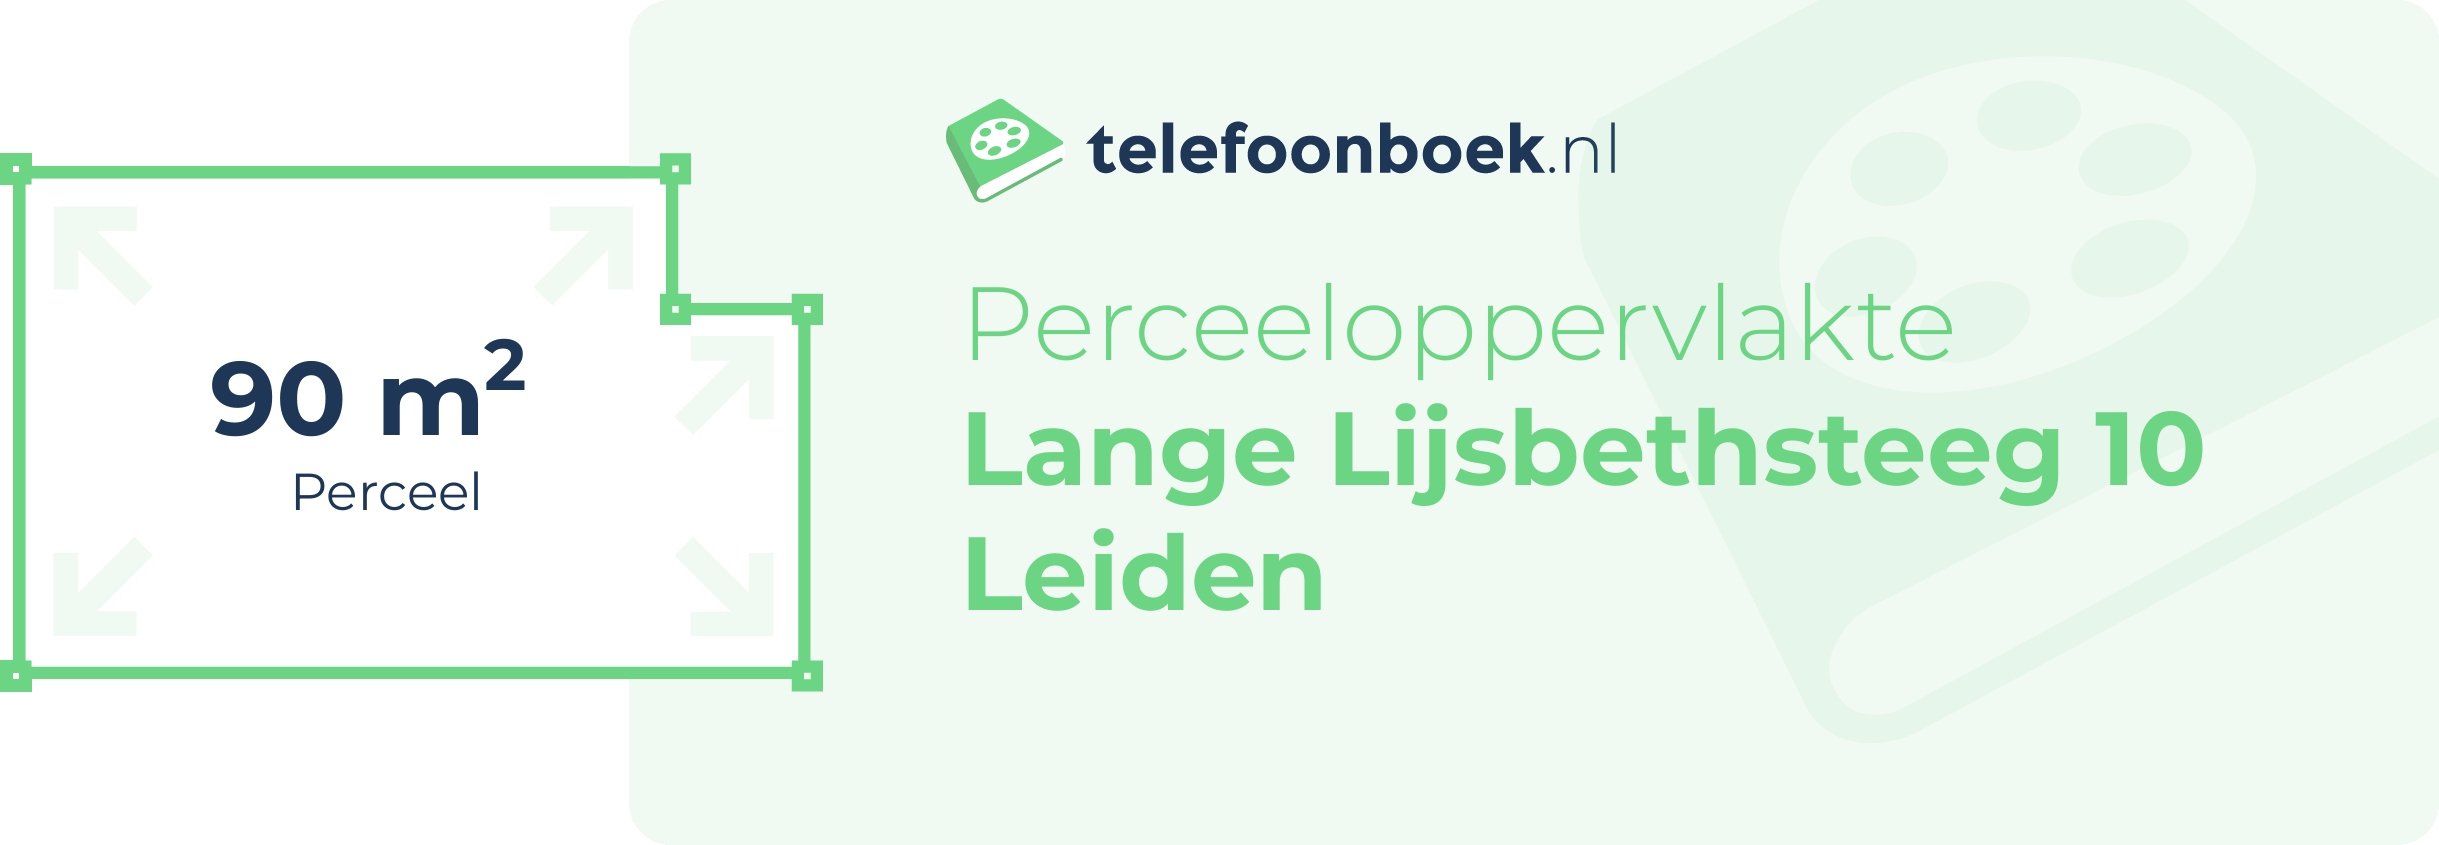 Perceeloppervlakte Lange Lijsbethsteeg 10 Leiden